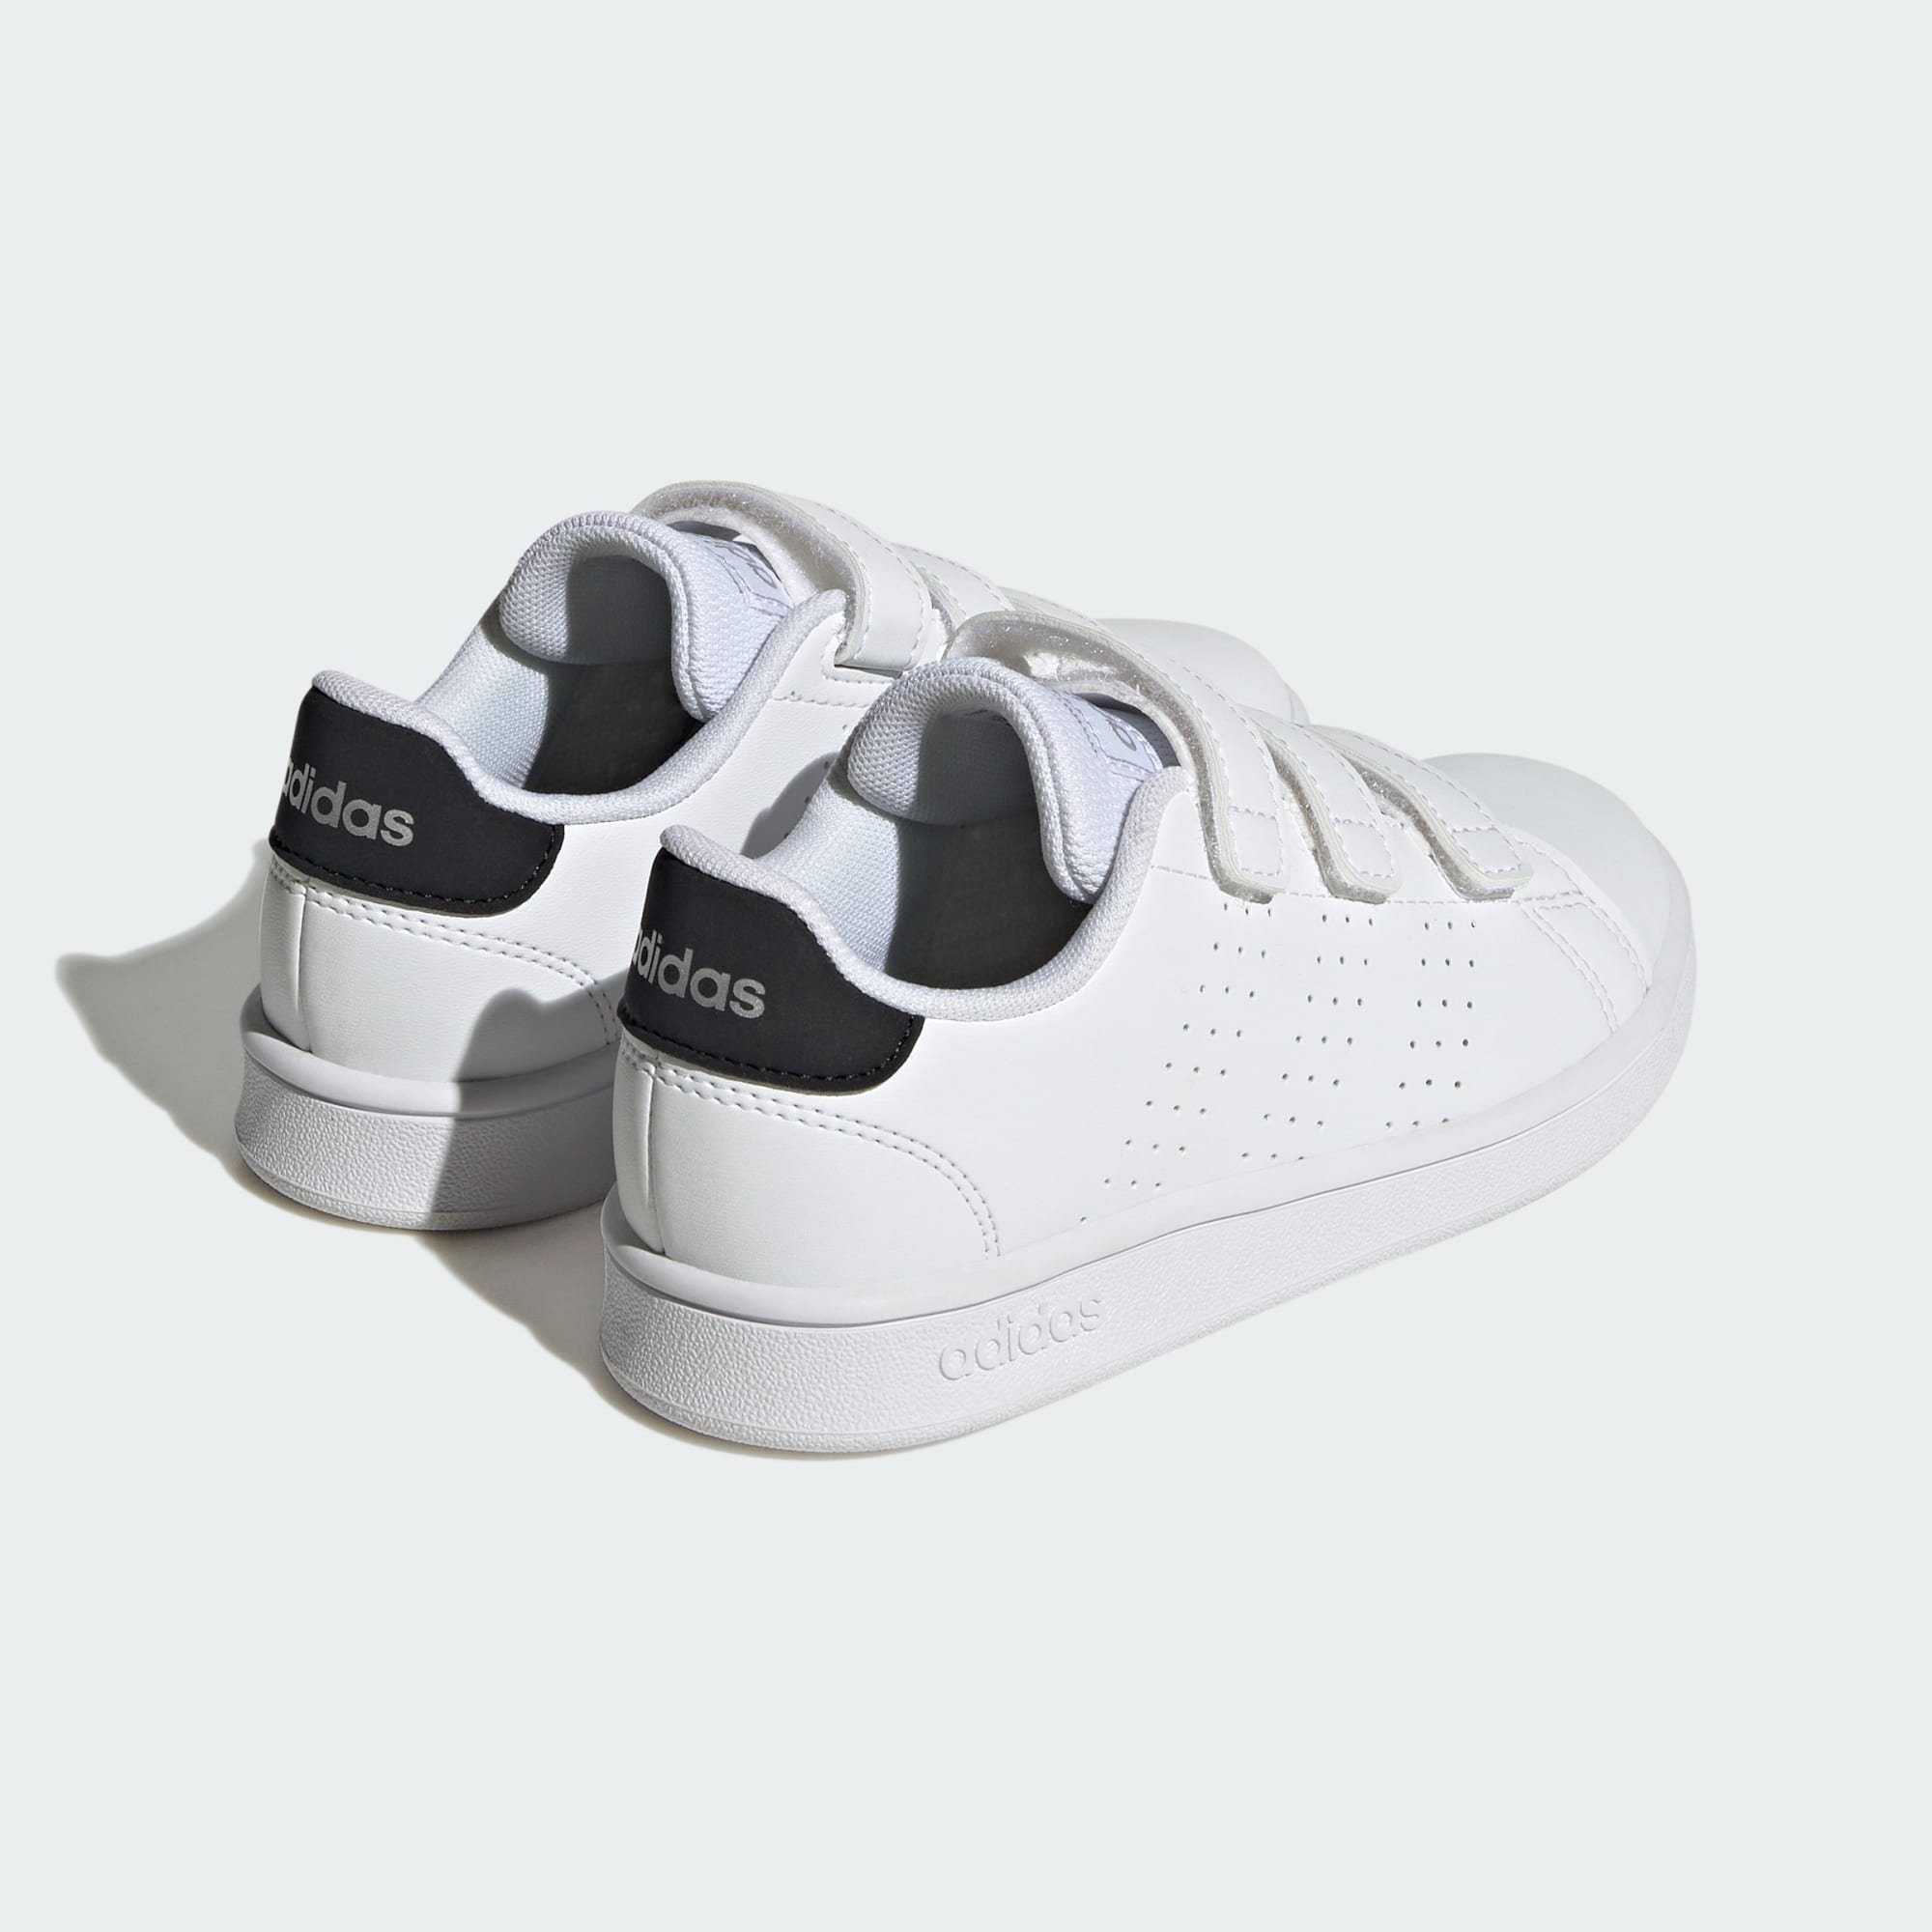 ADVANTAGE / LIFESTYLE Black Silver Sneaker adidas HOOK-AND-LOOP / Cloud Core SCHUH COURT White Sportswear Metallic